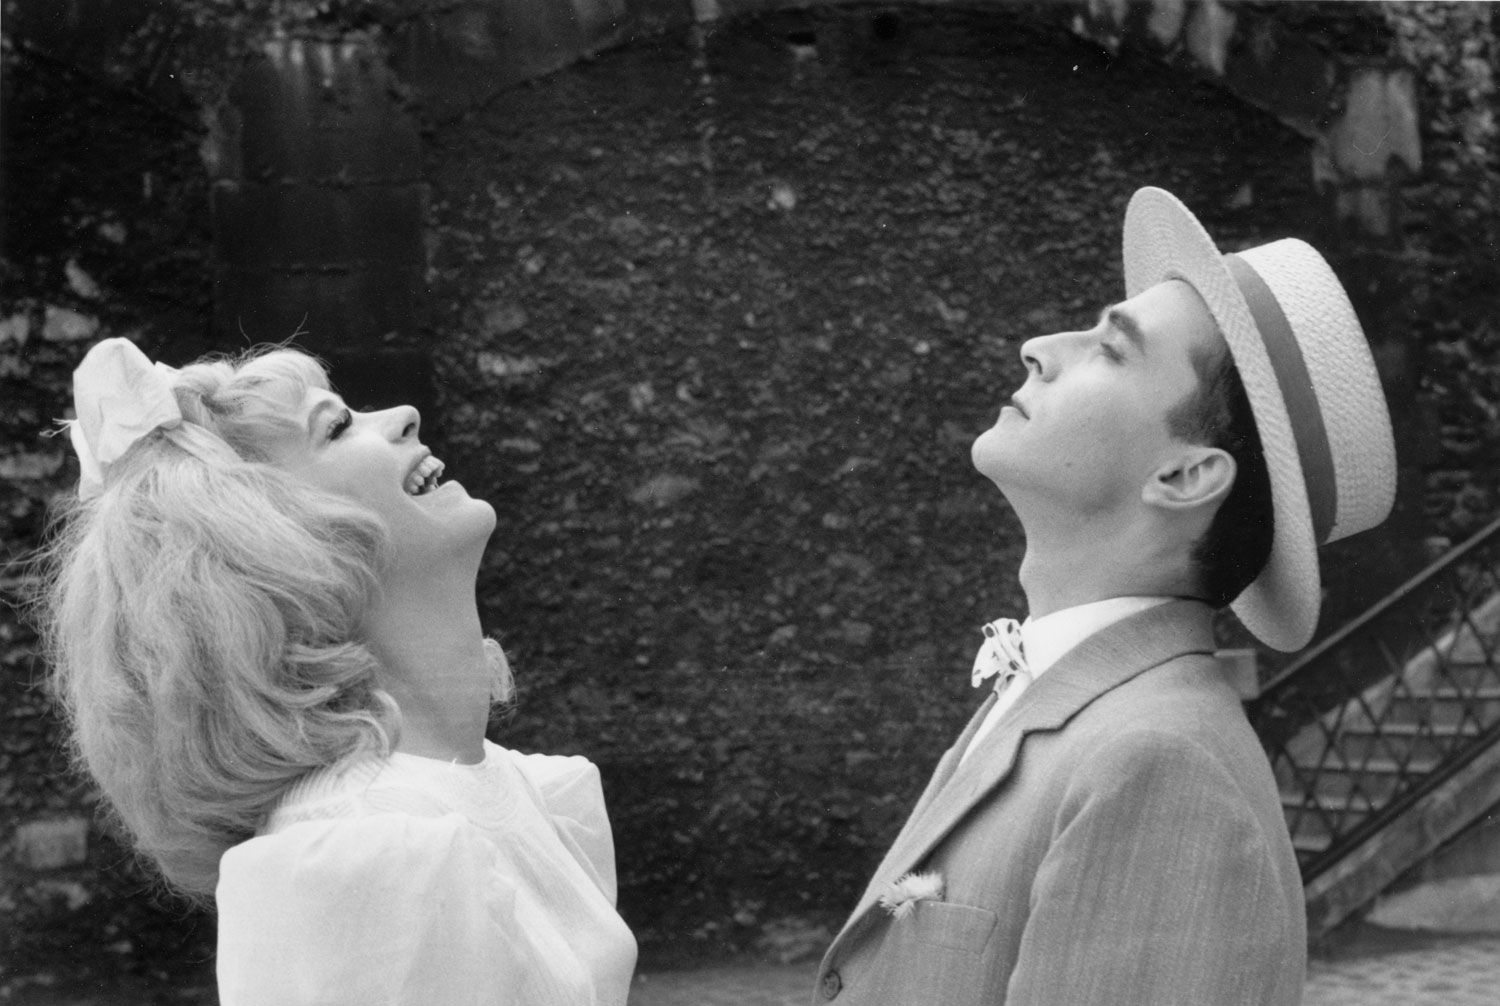 Anna Karina et Jean-Luc Godard dans “Cléo de 5 à 7” (1962) d'Agnès Varda